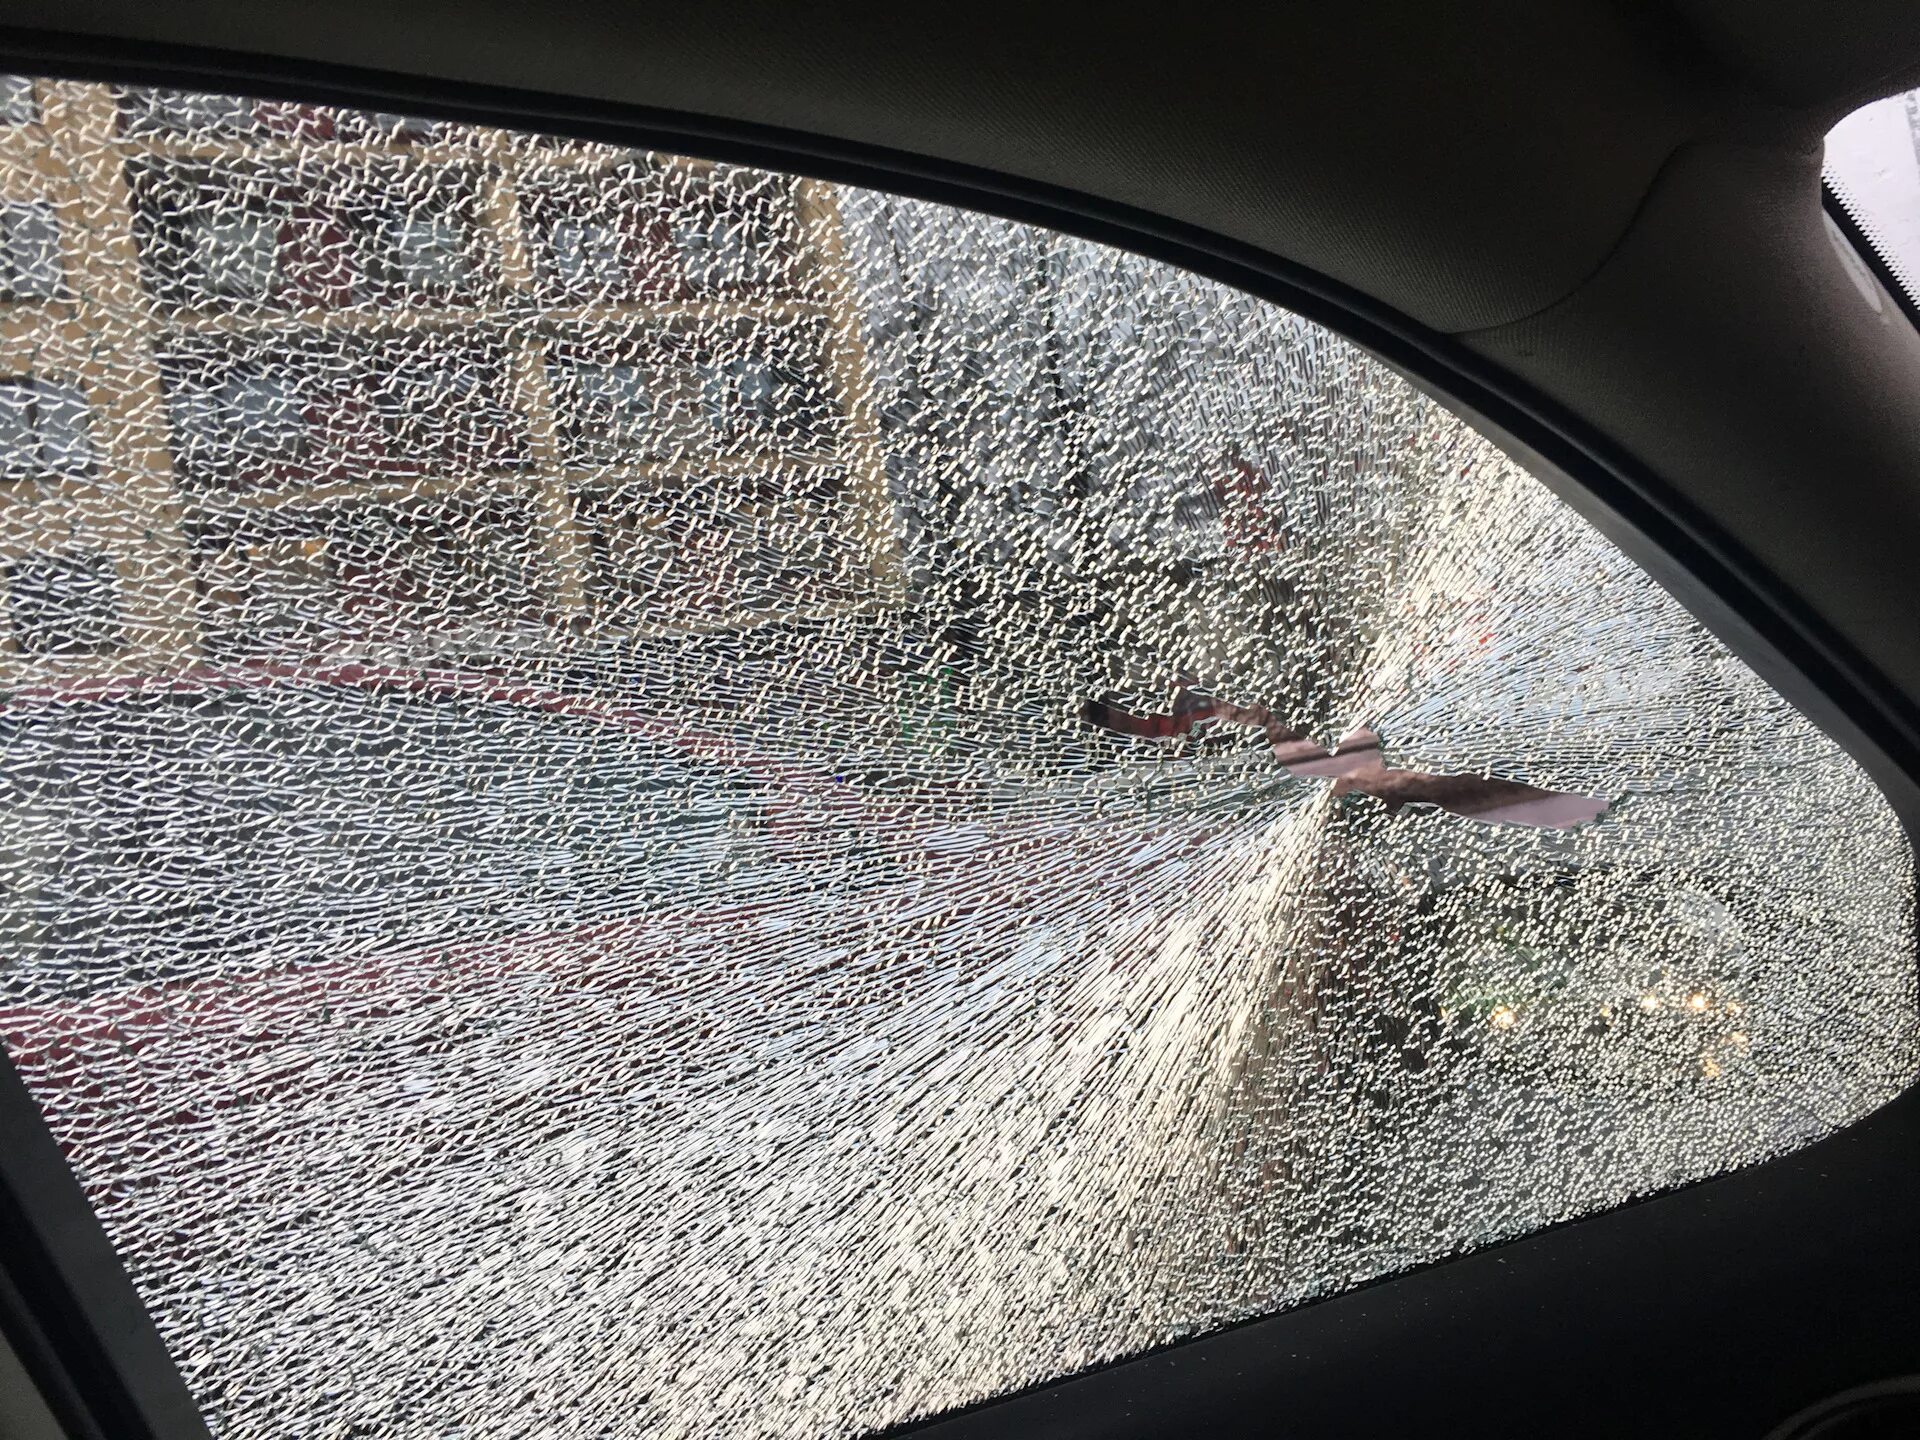 Разбили машину камнем. Разбитое стекло автомобиля. Разбитые стекла в машине. Автомобильное стекло. Камень в стекло автомобиля.